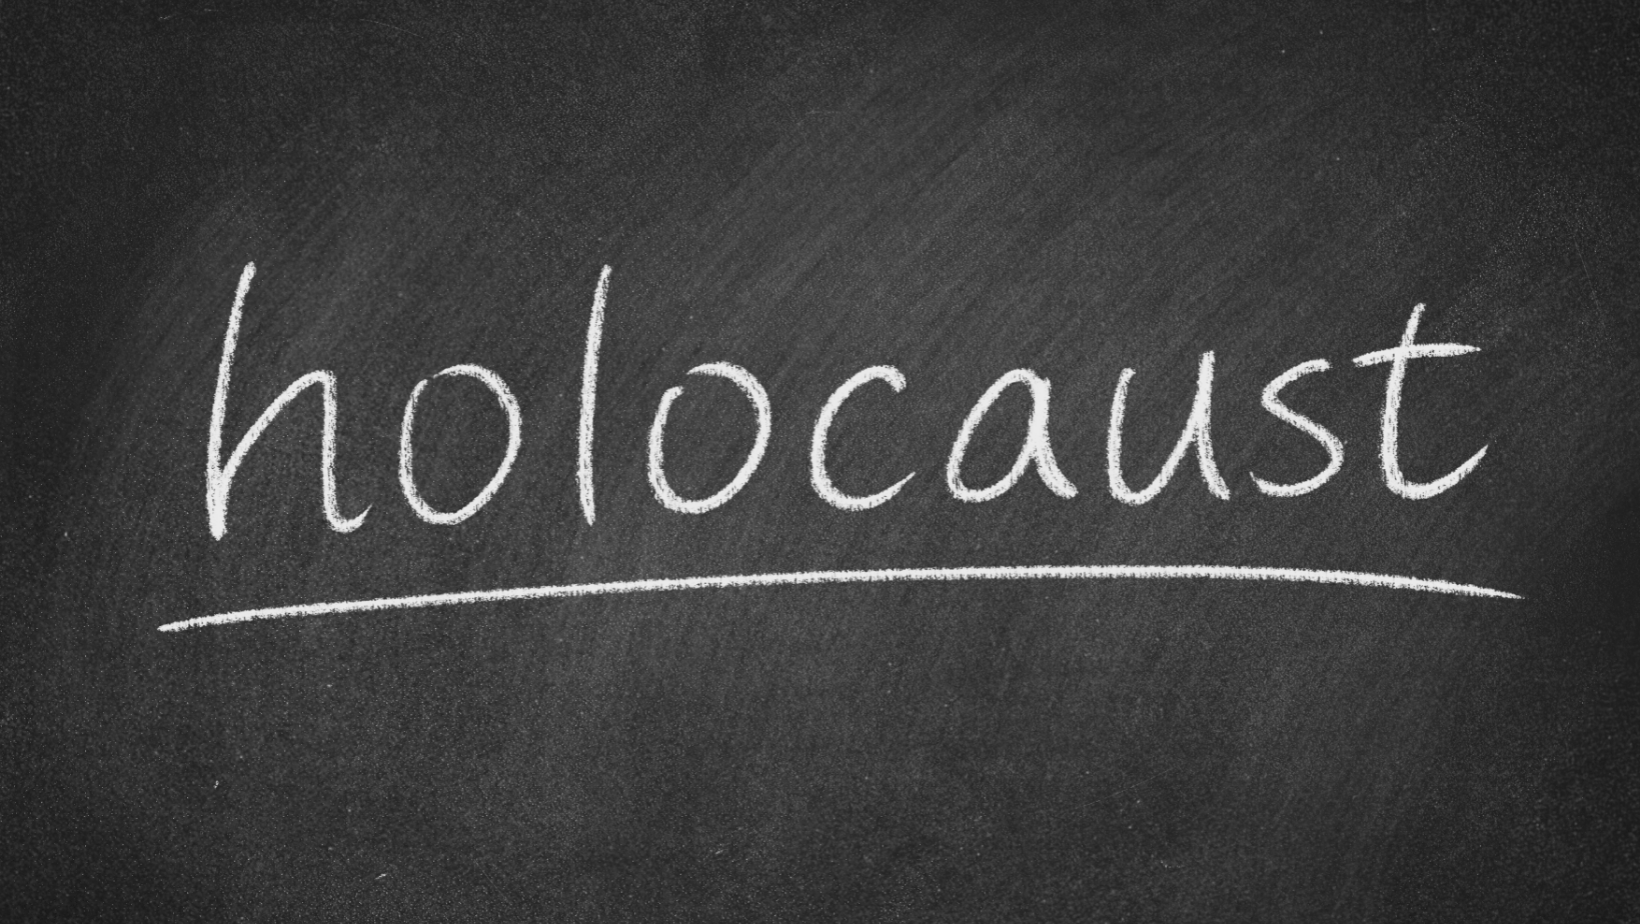 Blackboard with "holocaust" written in white chalk.